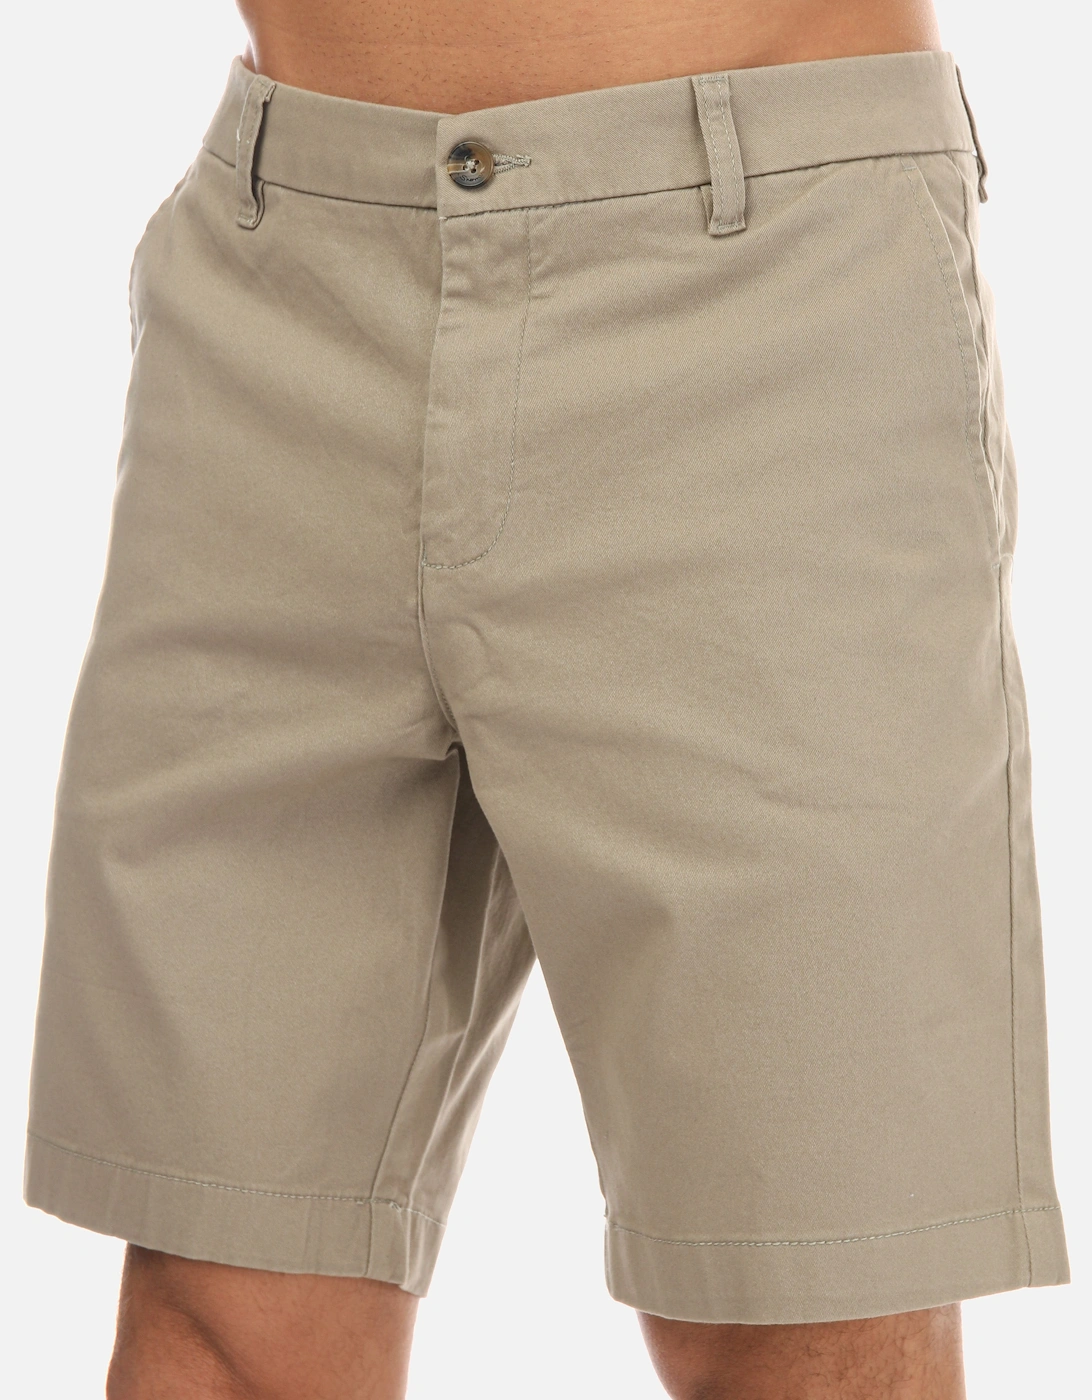 Ben Sherman Men's Mens Slim Fit Stretch Chino Shorts - Cream - Size: 44/32